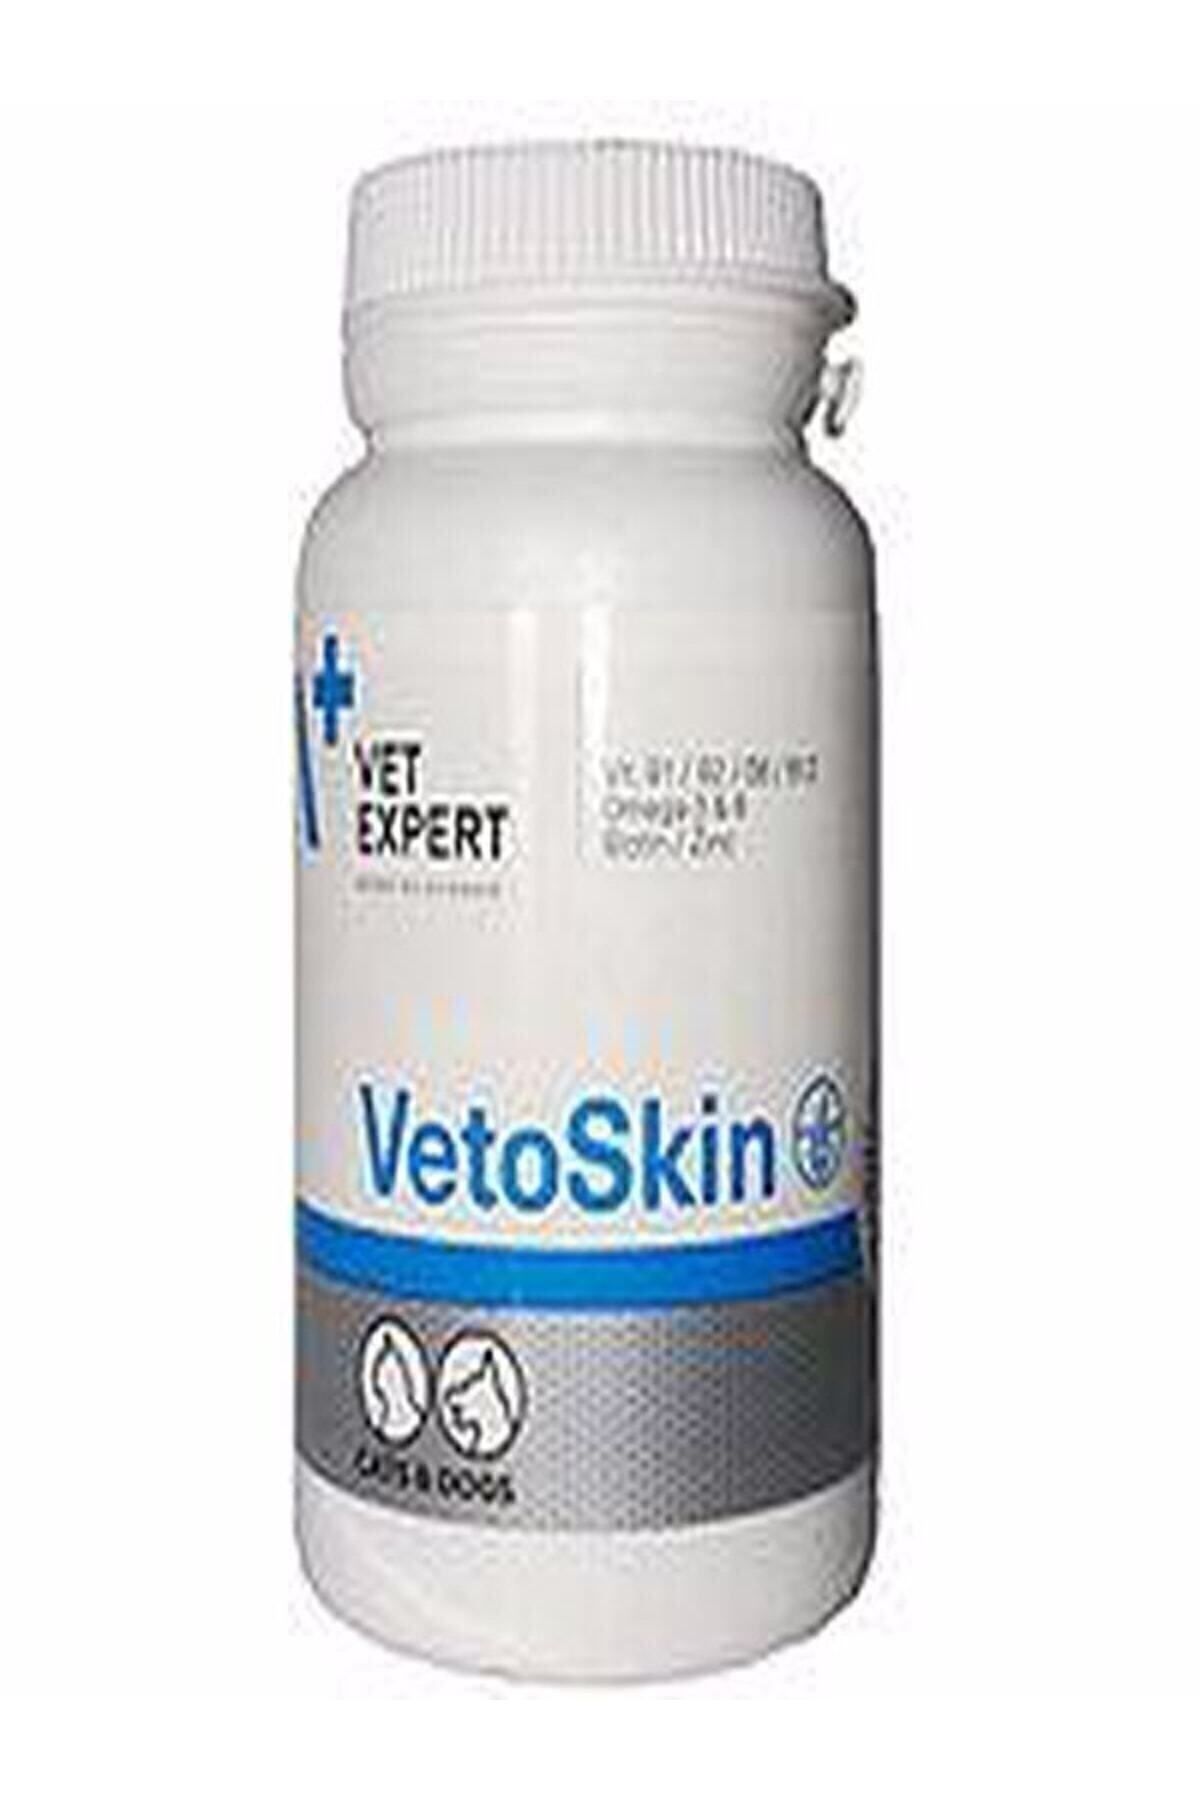 vet expert Vetexpert Vetoskin 90 Kapsül Köpek Kedi Vitamin